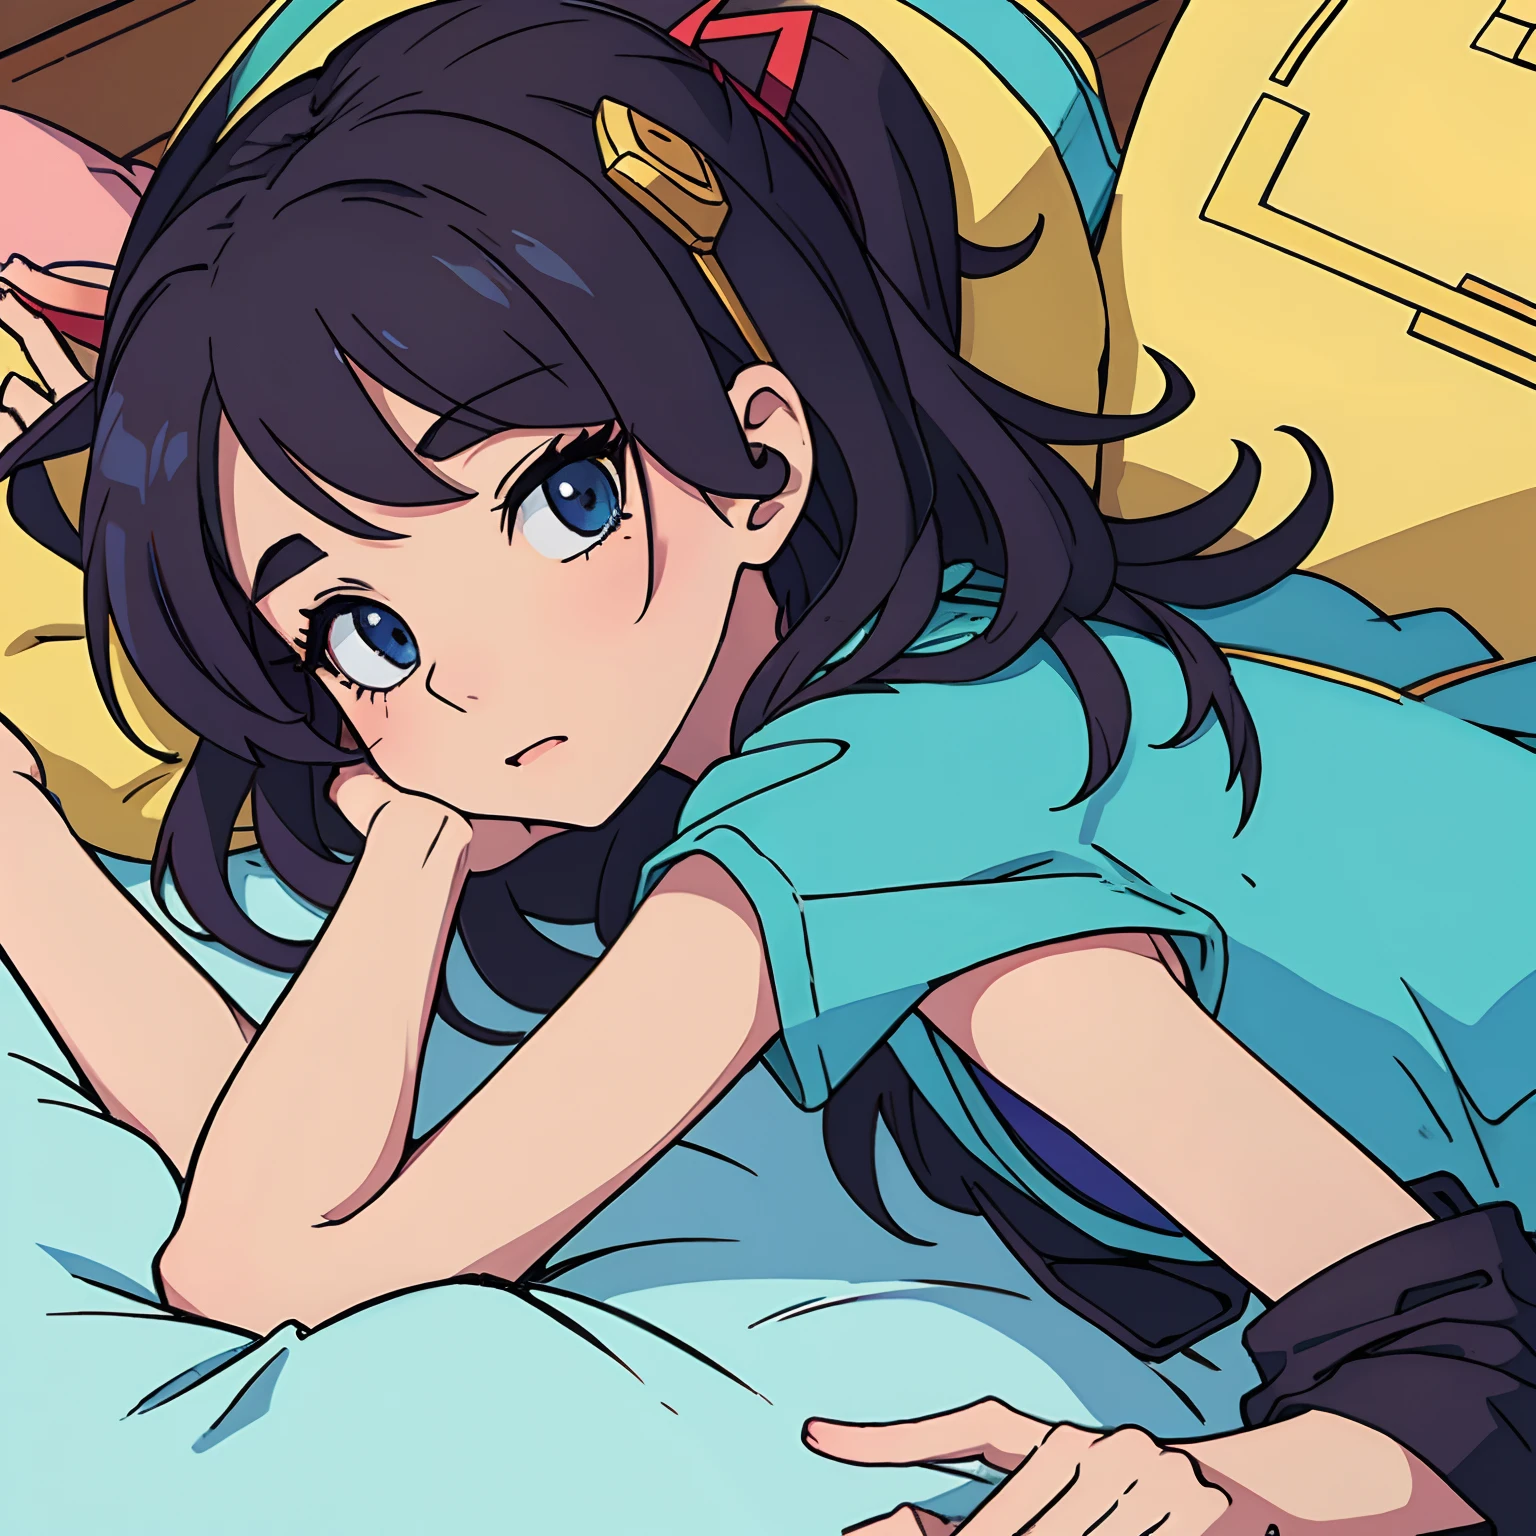 Anime Girl lying on bed - Imgur